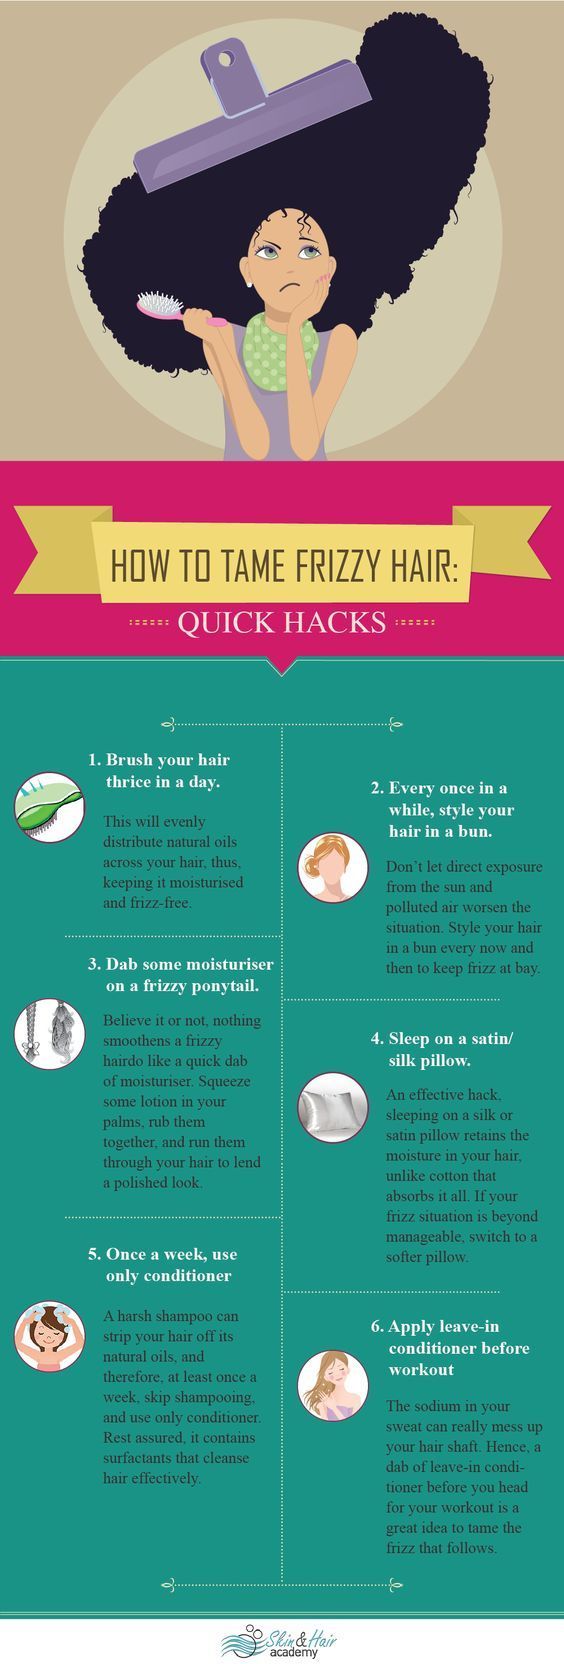 13 professional hair Tips ideas